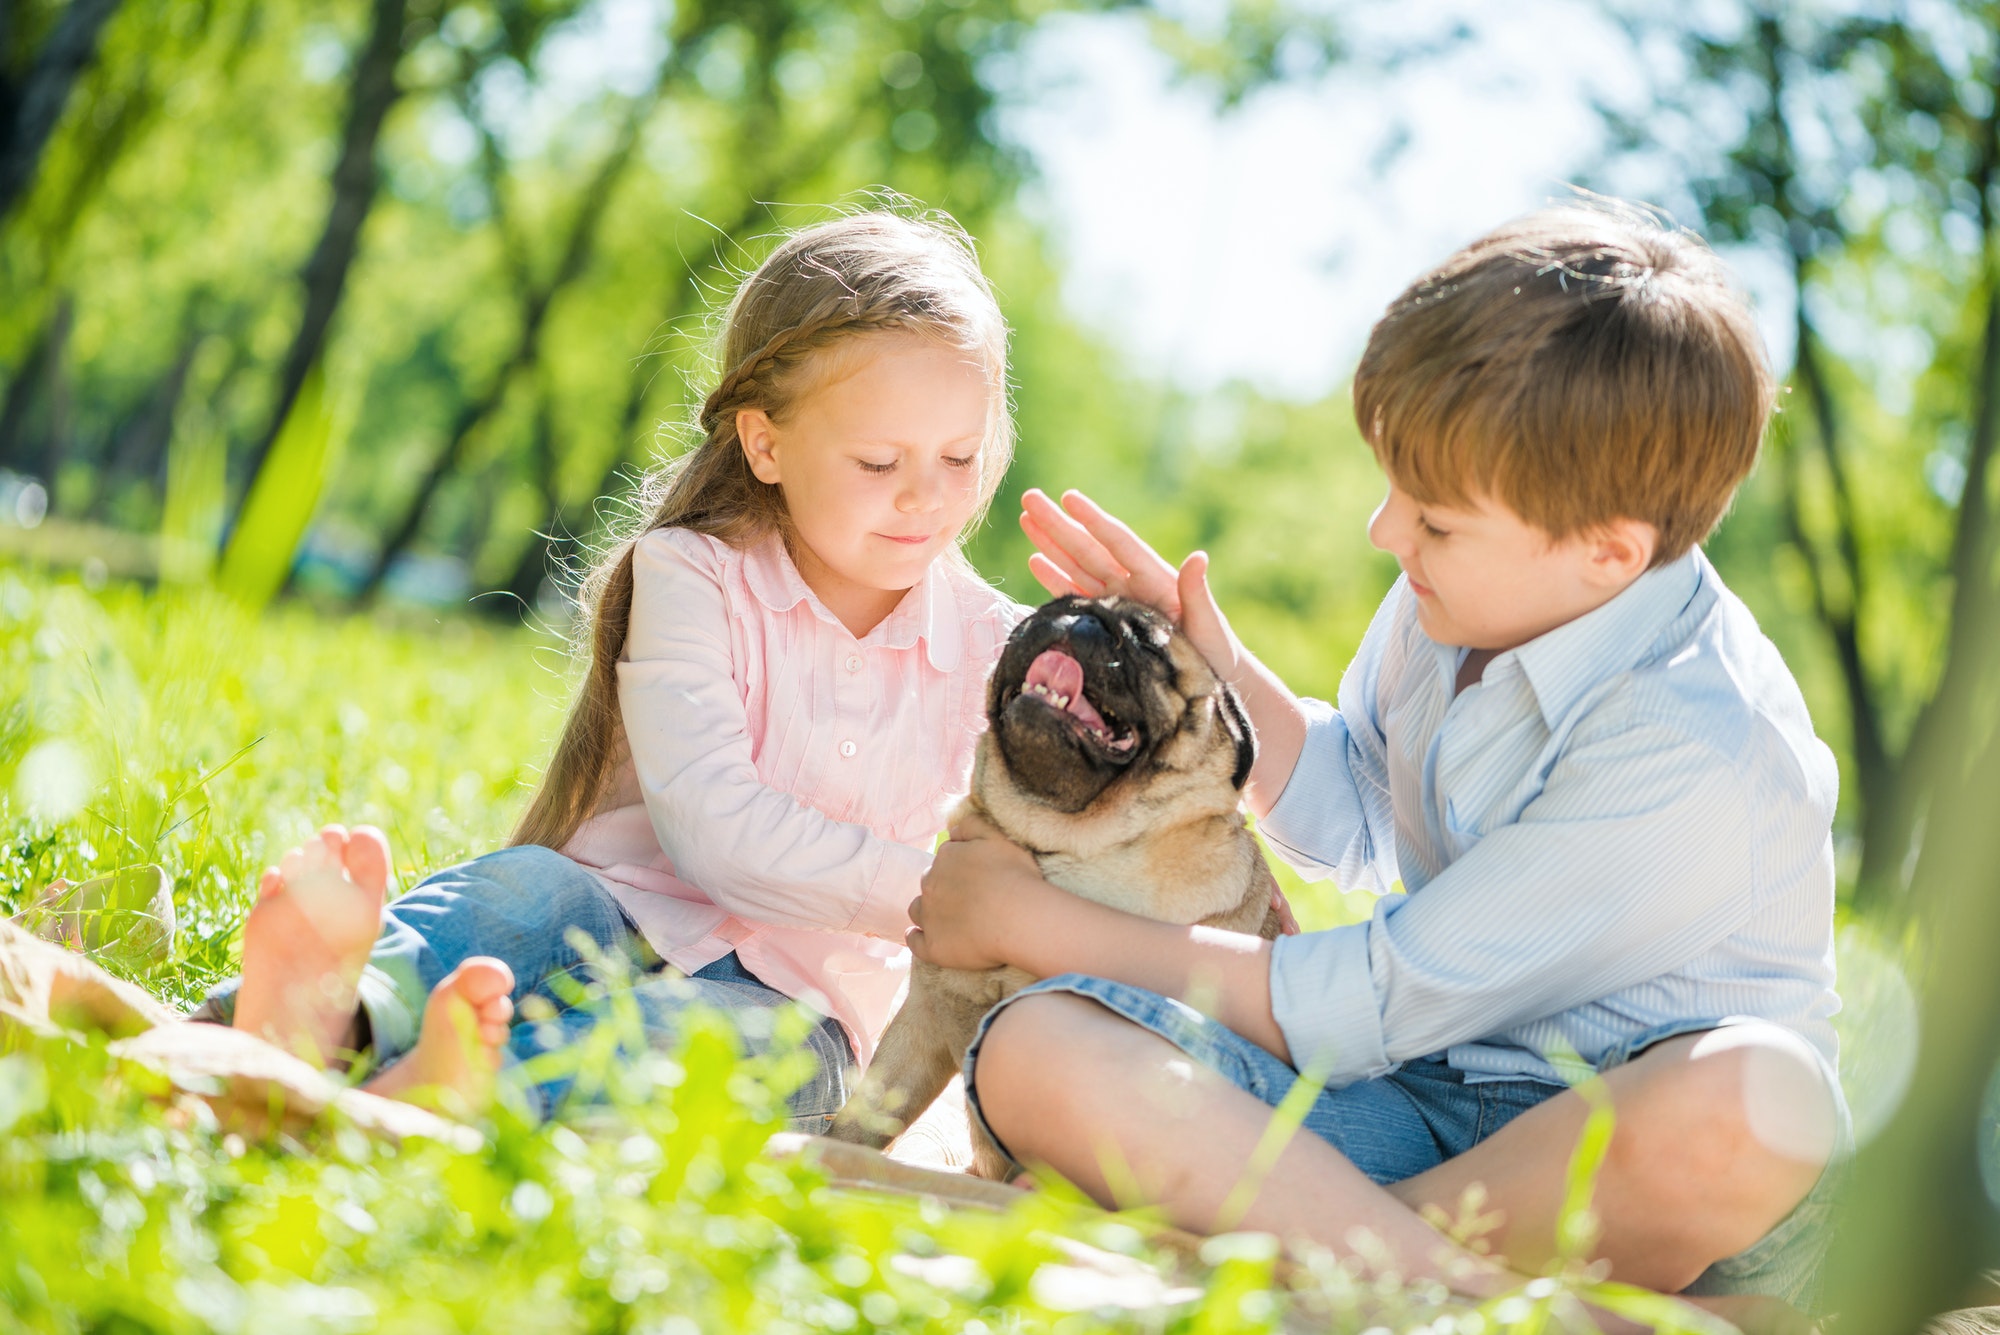 Children in park with pet